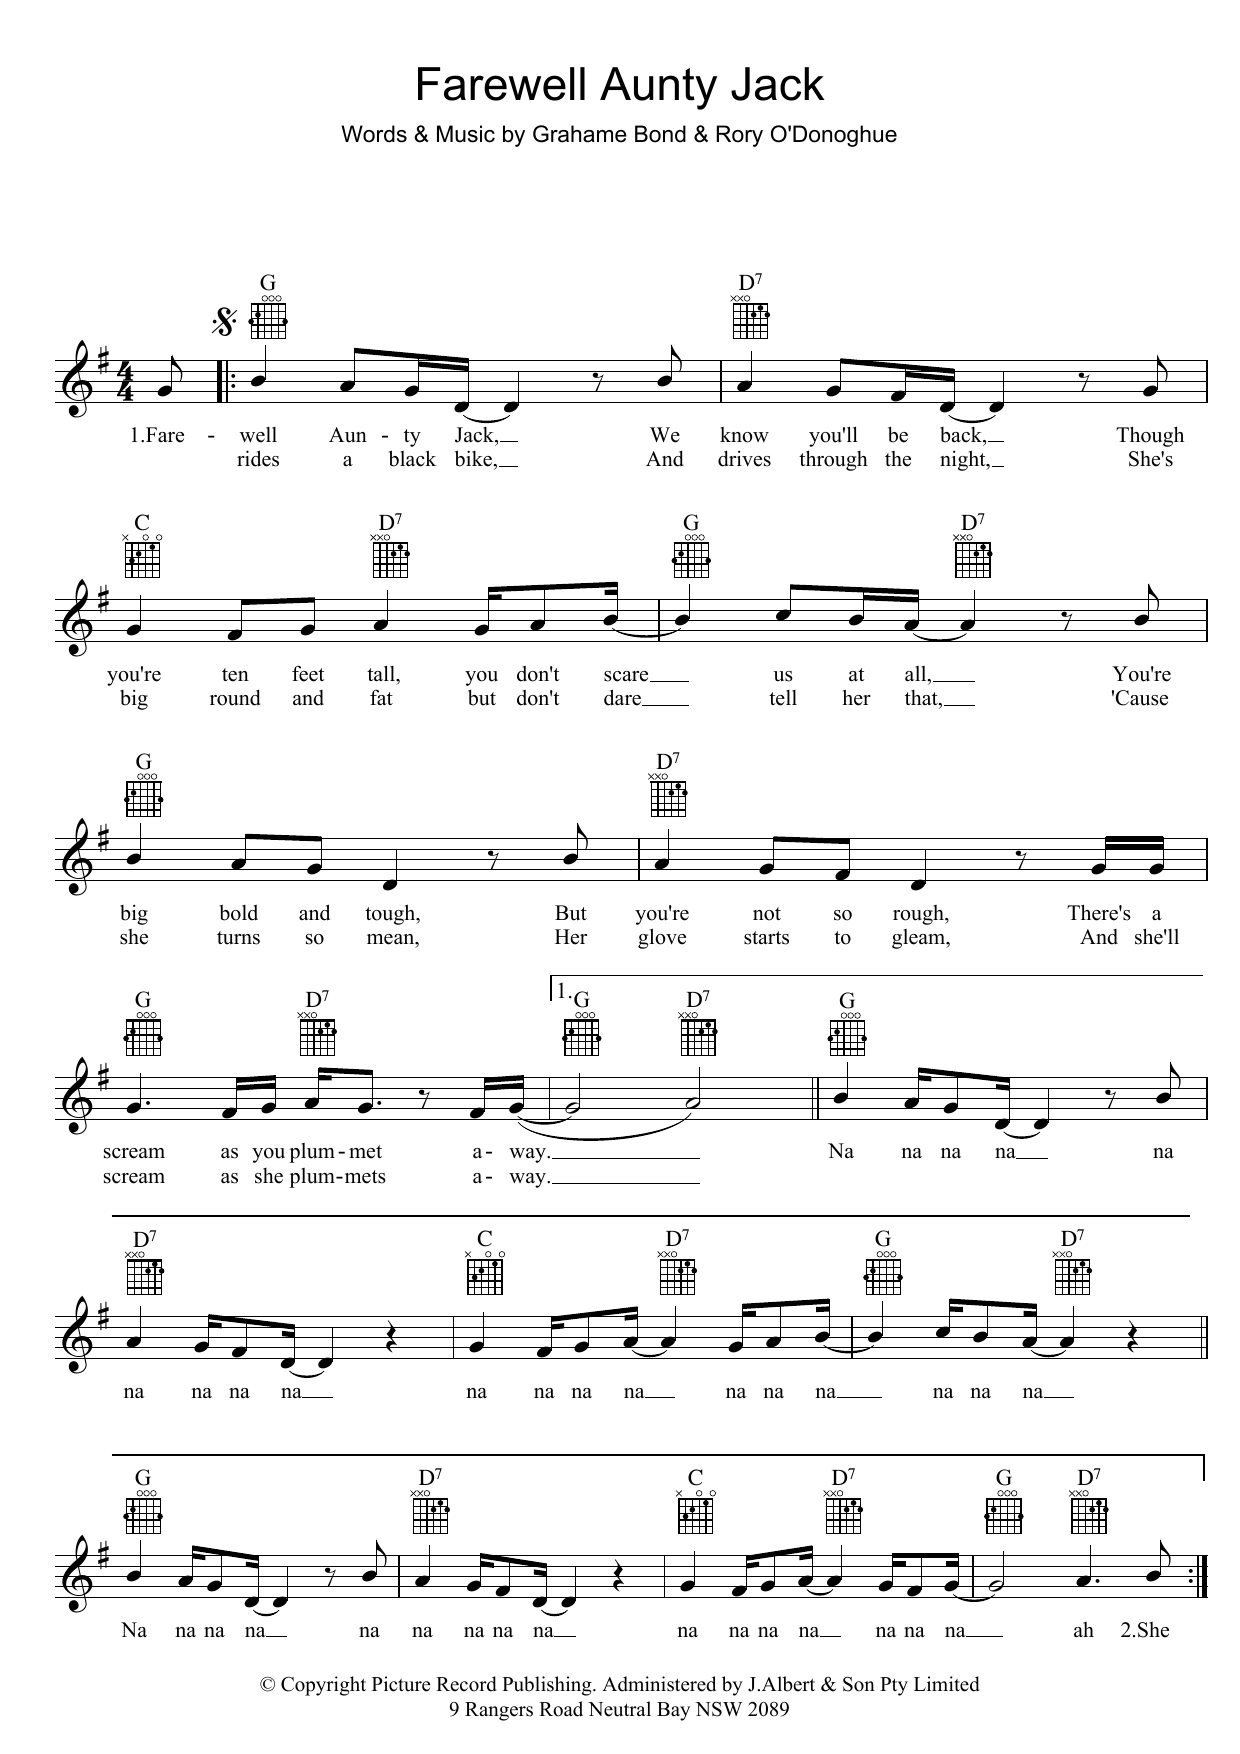 Grahame Bond Farewell Aunty Jack Sheet Music Notes & Chords for Melody Line, Lyrics & Chords - Download or Print PDF